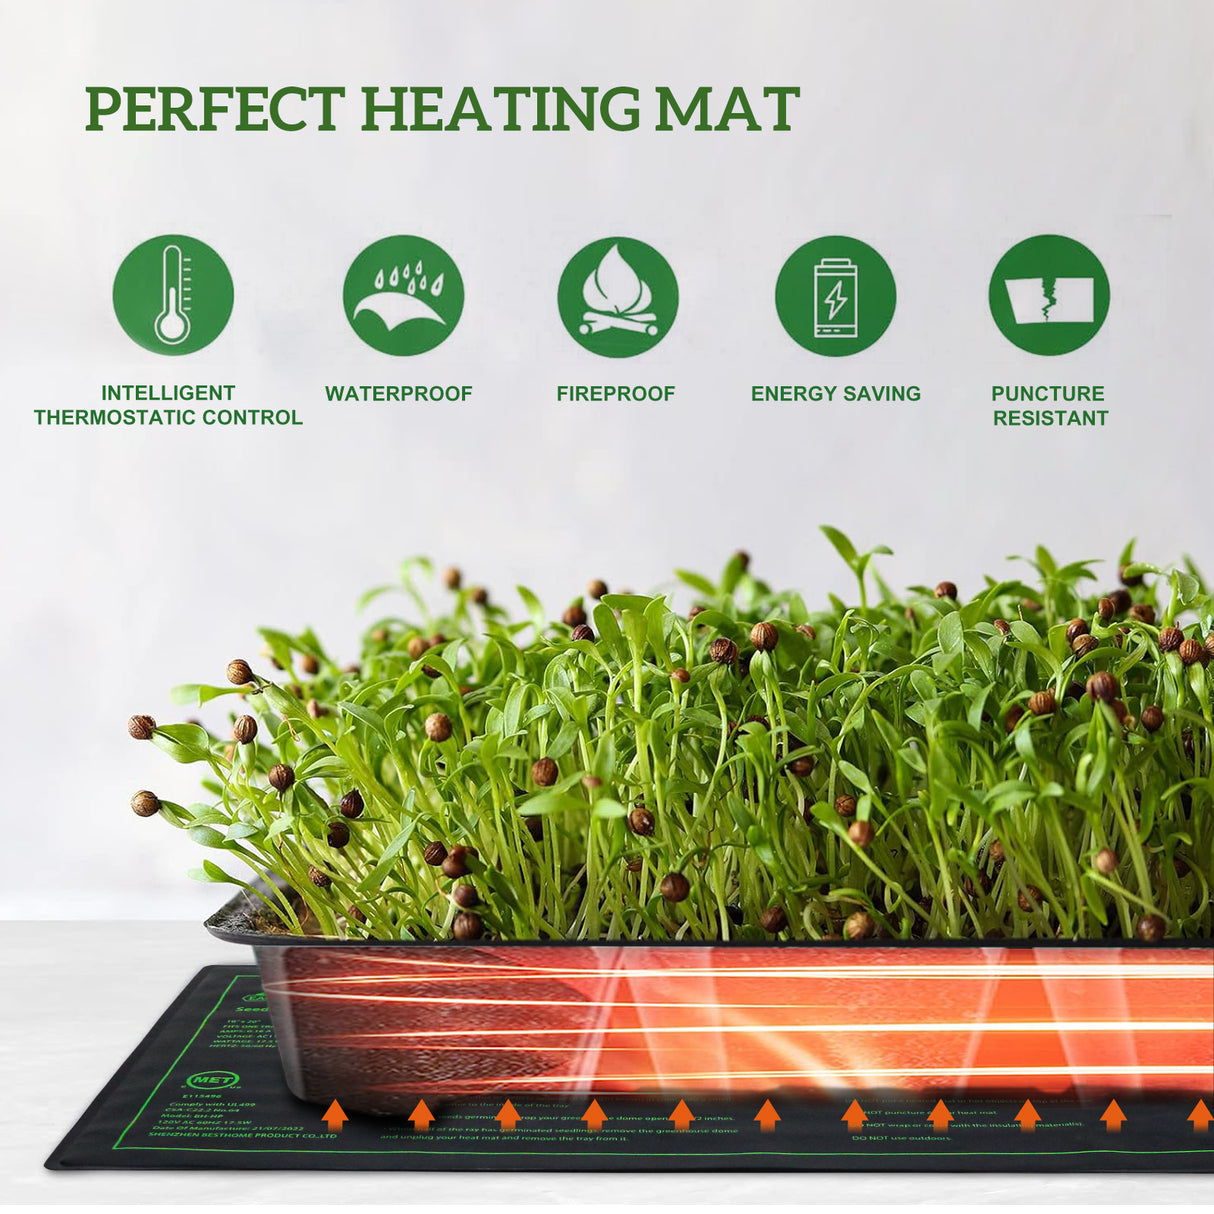 EAGLE PEAK 2 Pack Waterproof Seedling Heat Mat 10” x 20”, UL & MET-Certified Heating Pad for Seed Starting, Seed Germination, Warm Hydroponic Gardening Heating Pad, Contains (2) Warming Mats